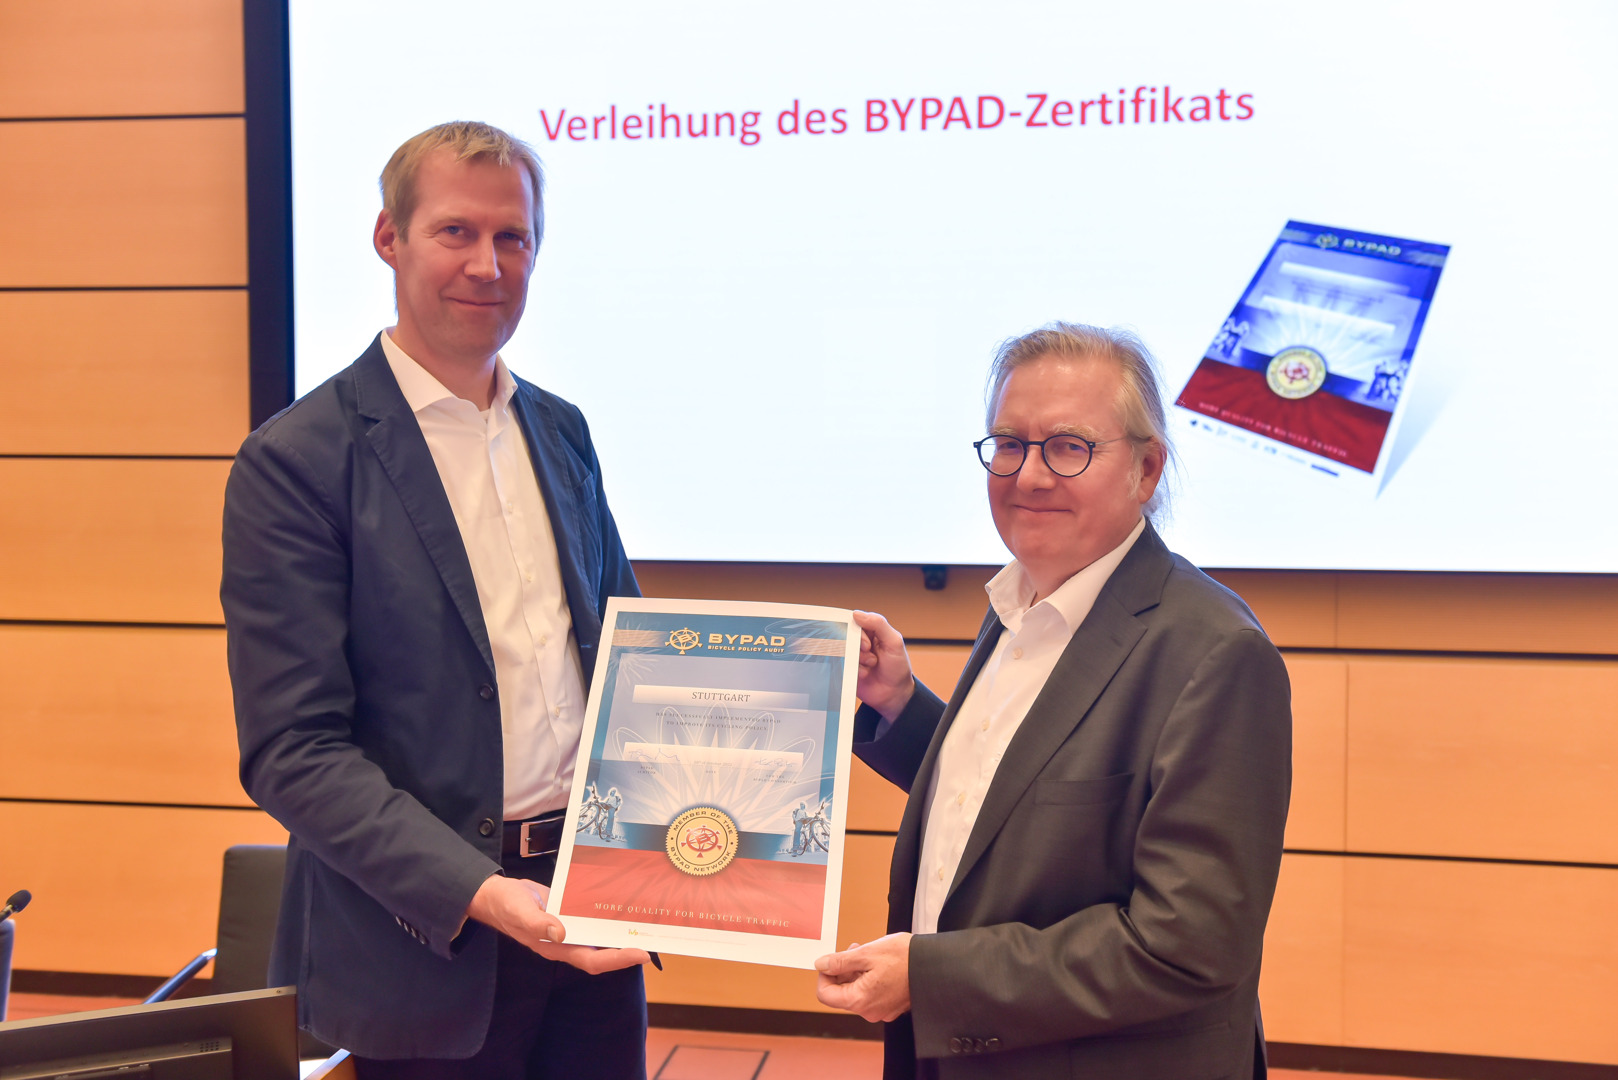 Bürgermeister Peter Pätzold (rechts) und BYPAD-Auditor Thomas Möller (links) mit dem BYPAD-Zertifikat. Foto: Max Kovalenko/Stadt Stuttgart